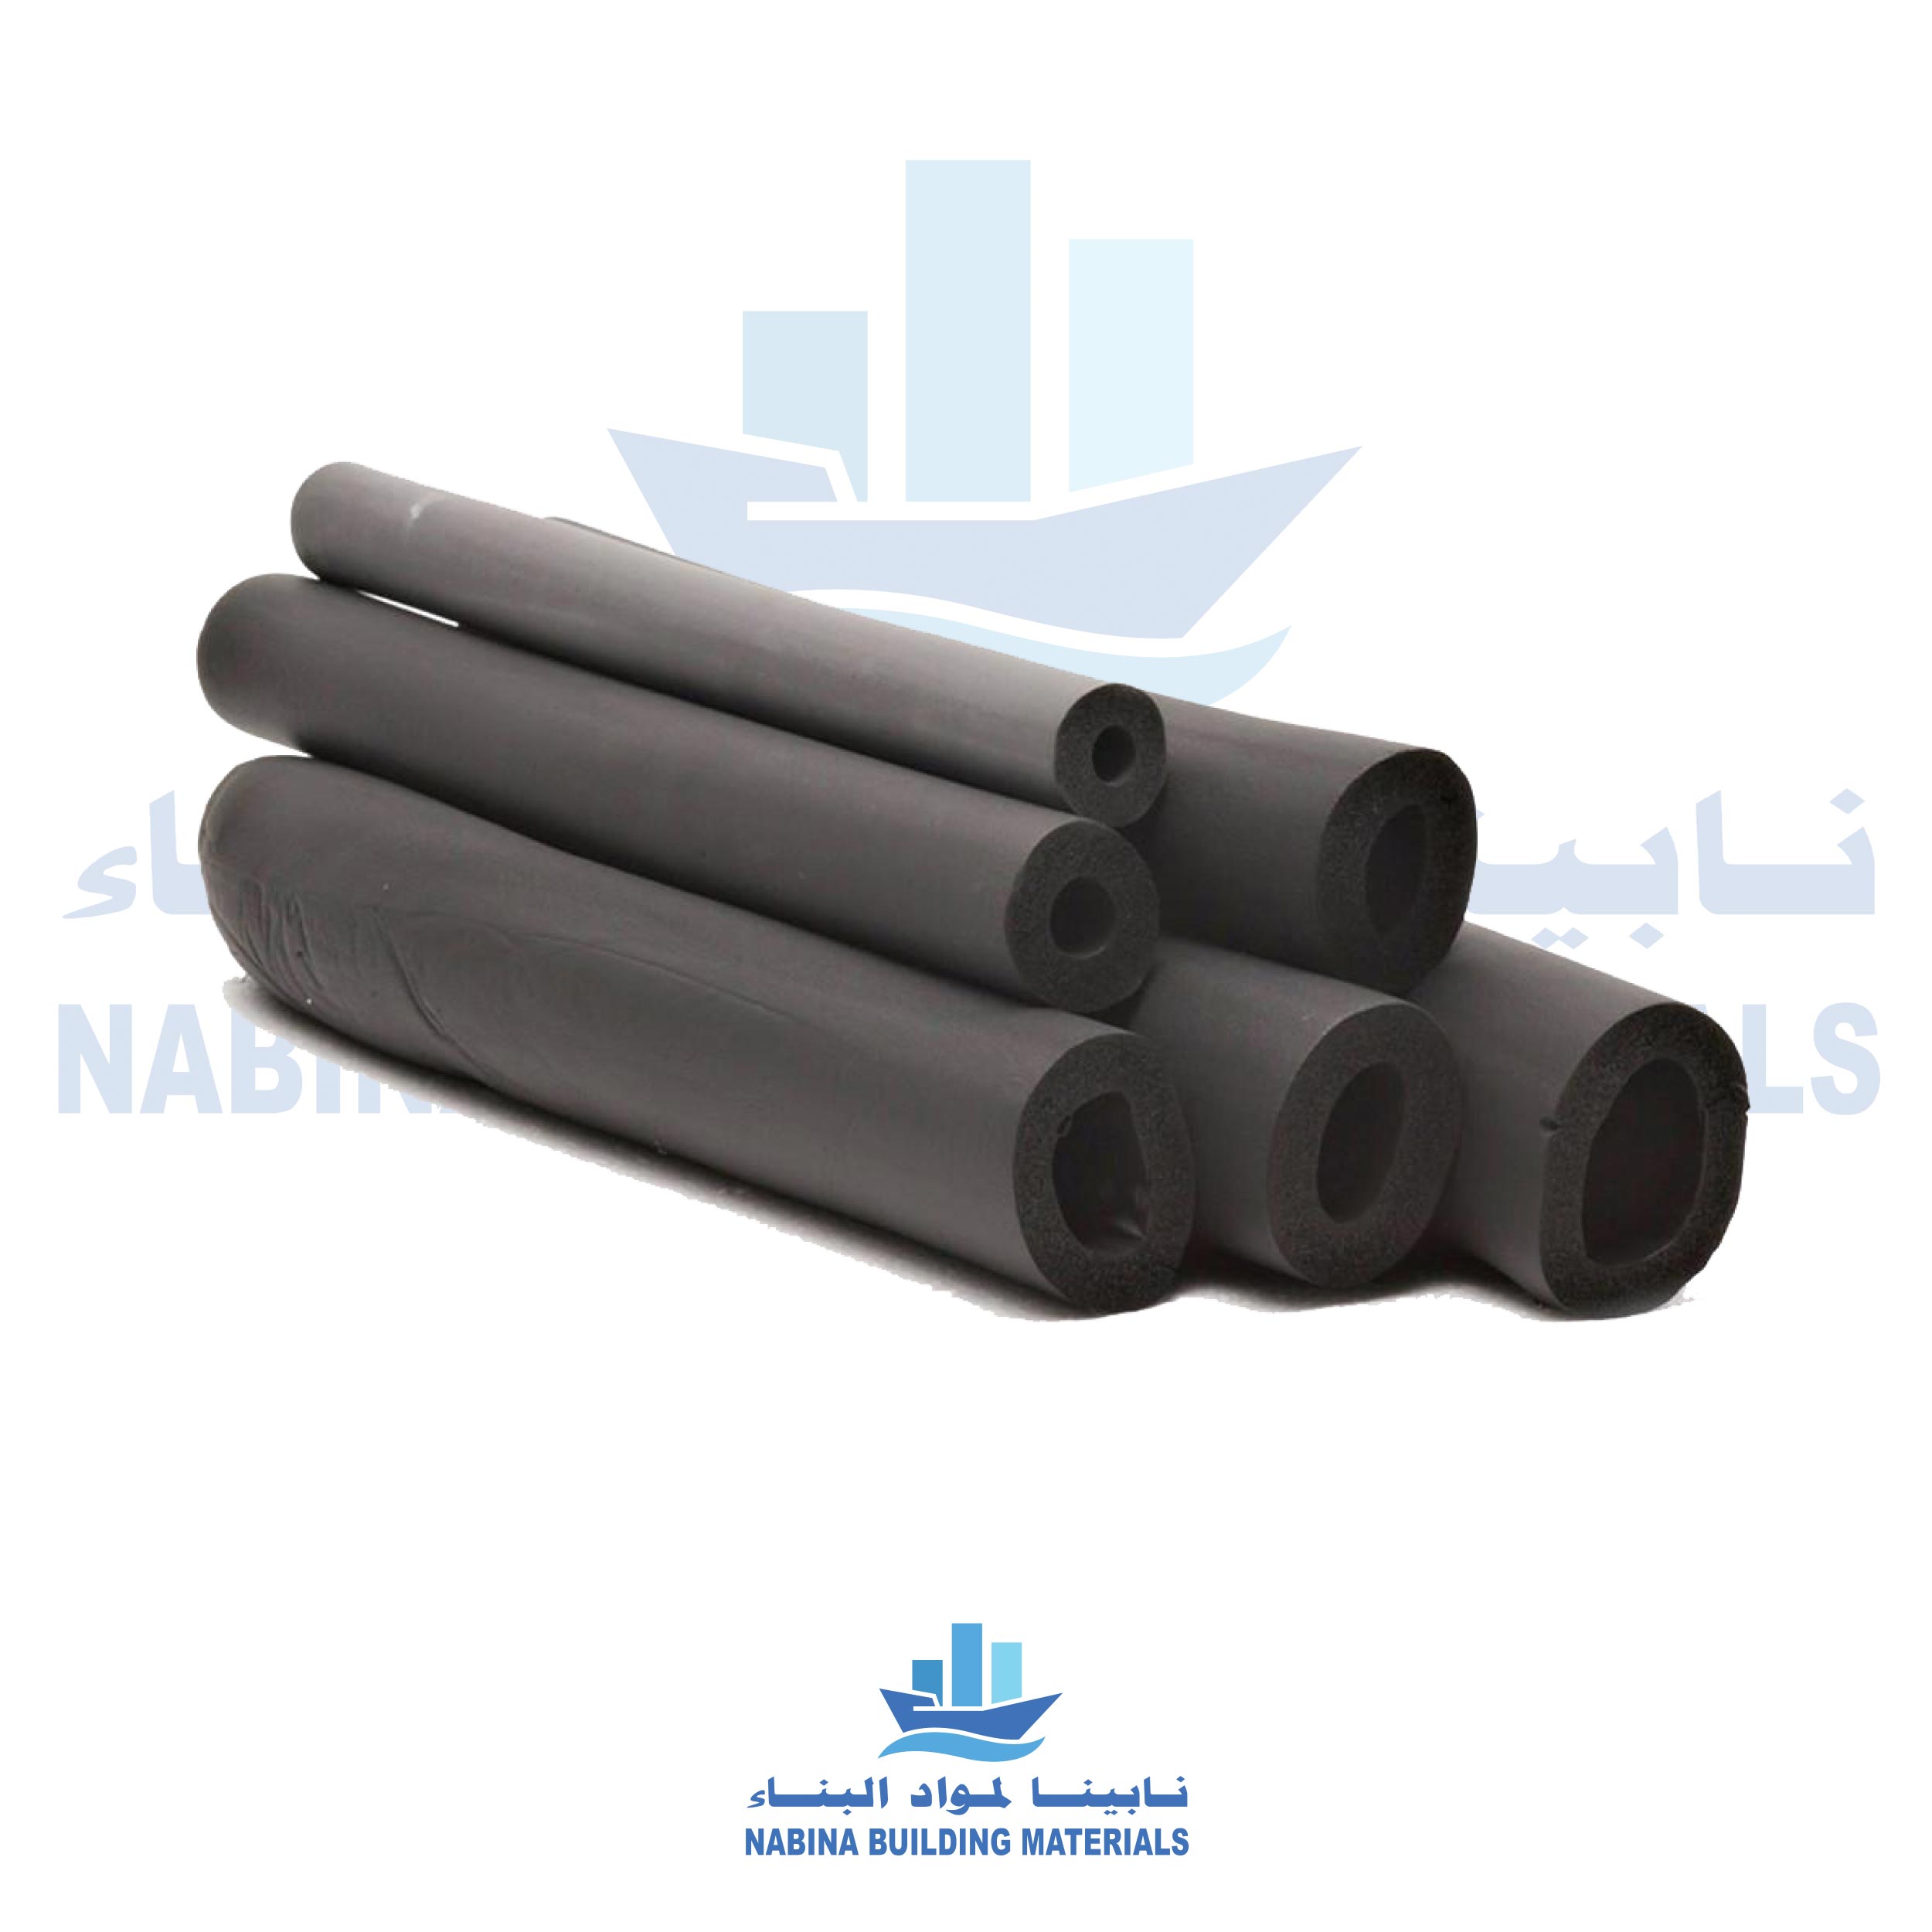 Nabina-Building-Materials-insulation-tube